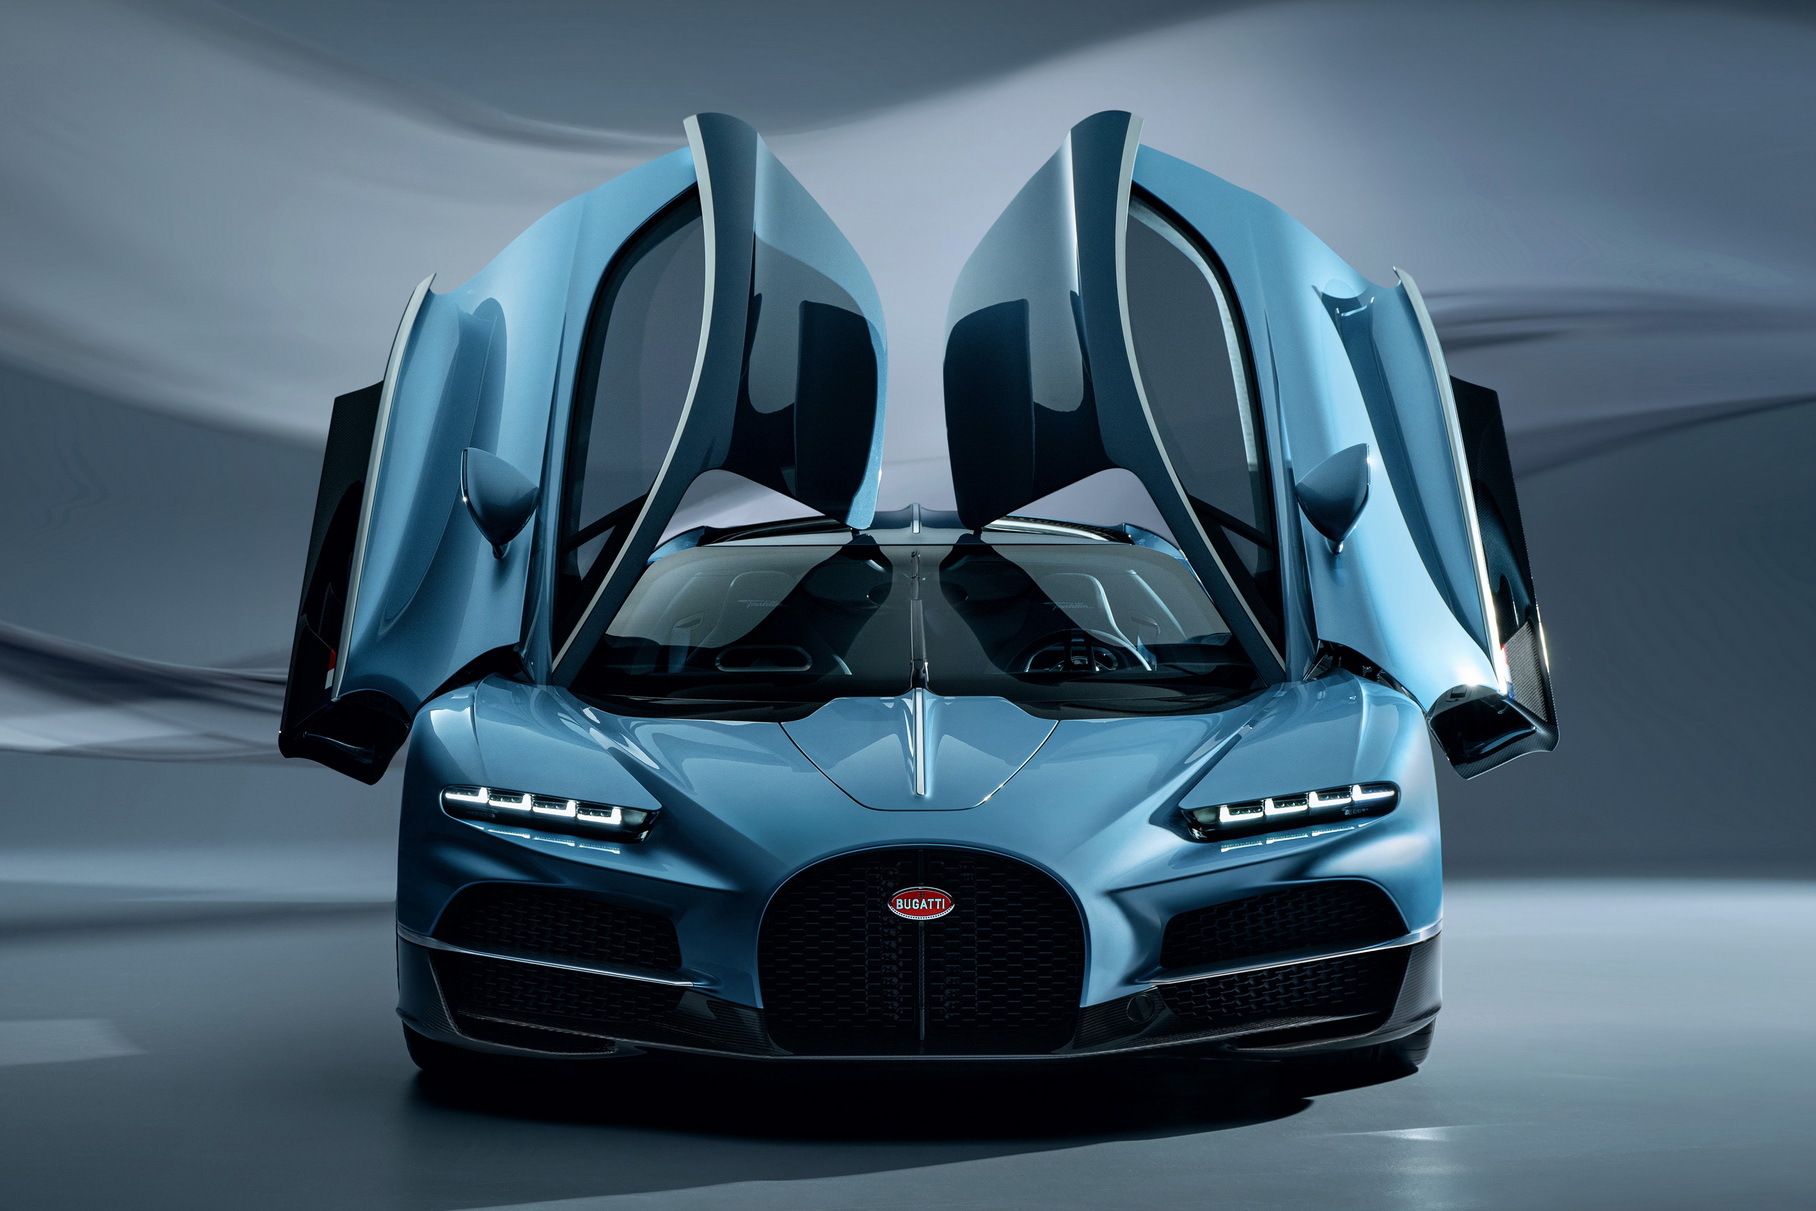 French media: Zelensky’s wife ordered a Bugatti for 4.5 million euros